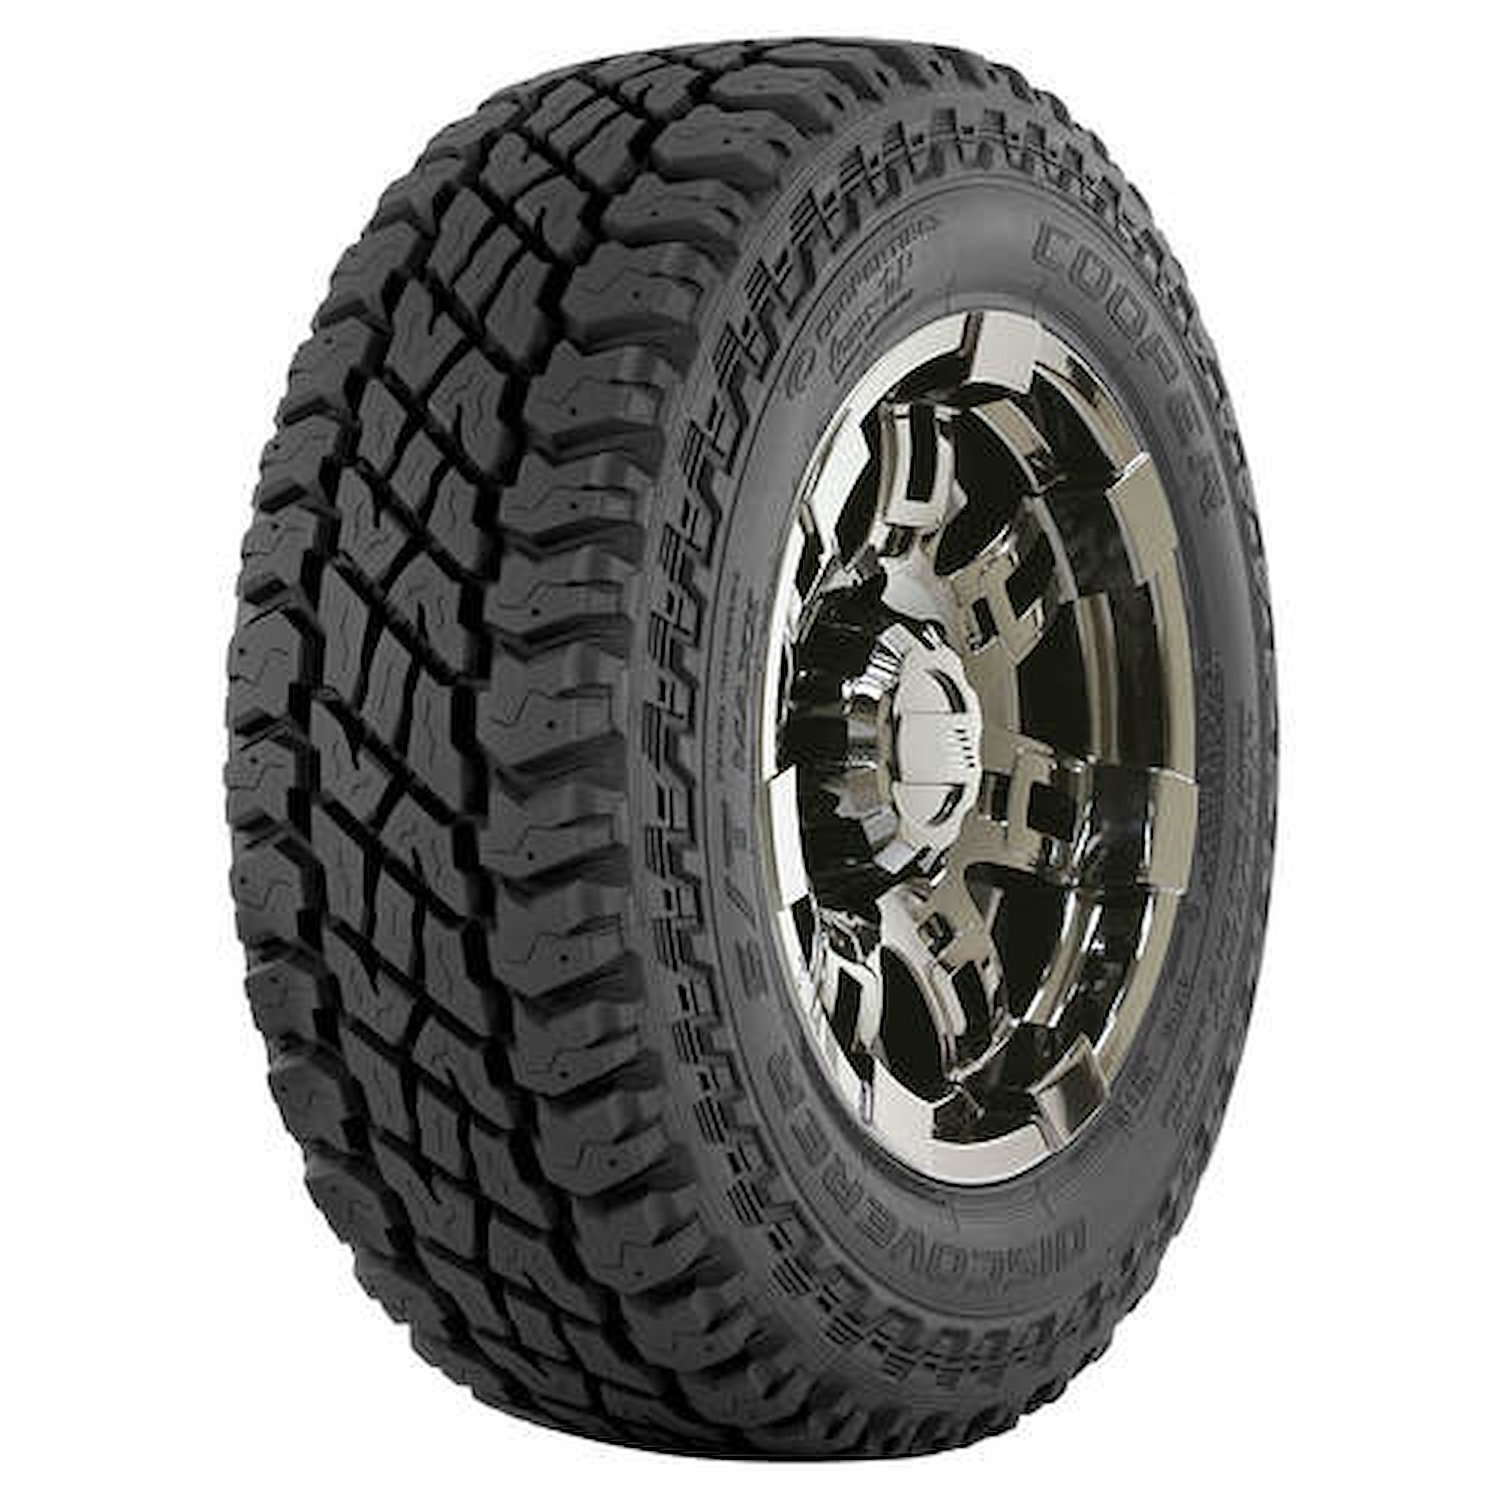 Discoverer S/T Maxx All-Terrain Tire, LT245/75R16